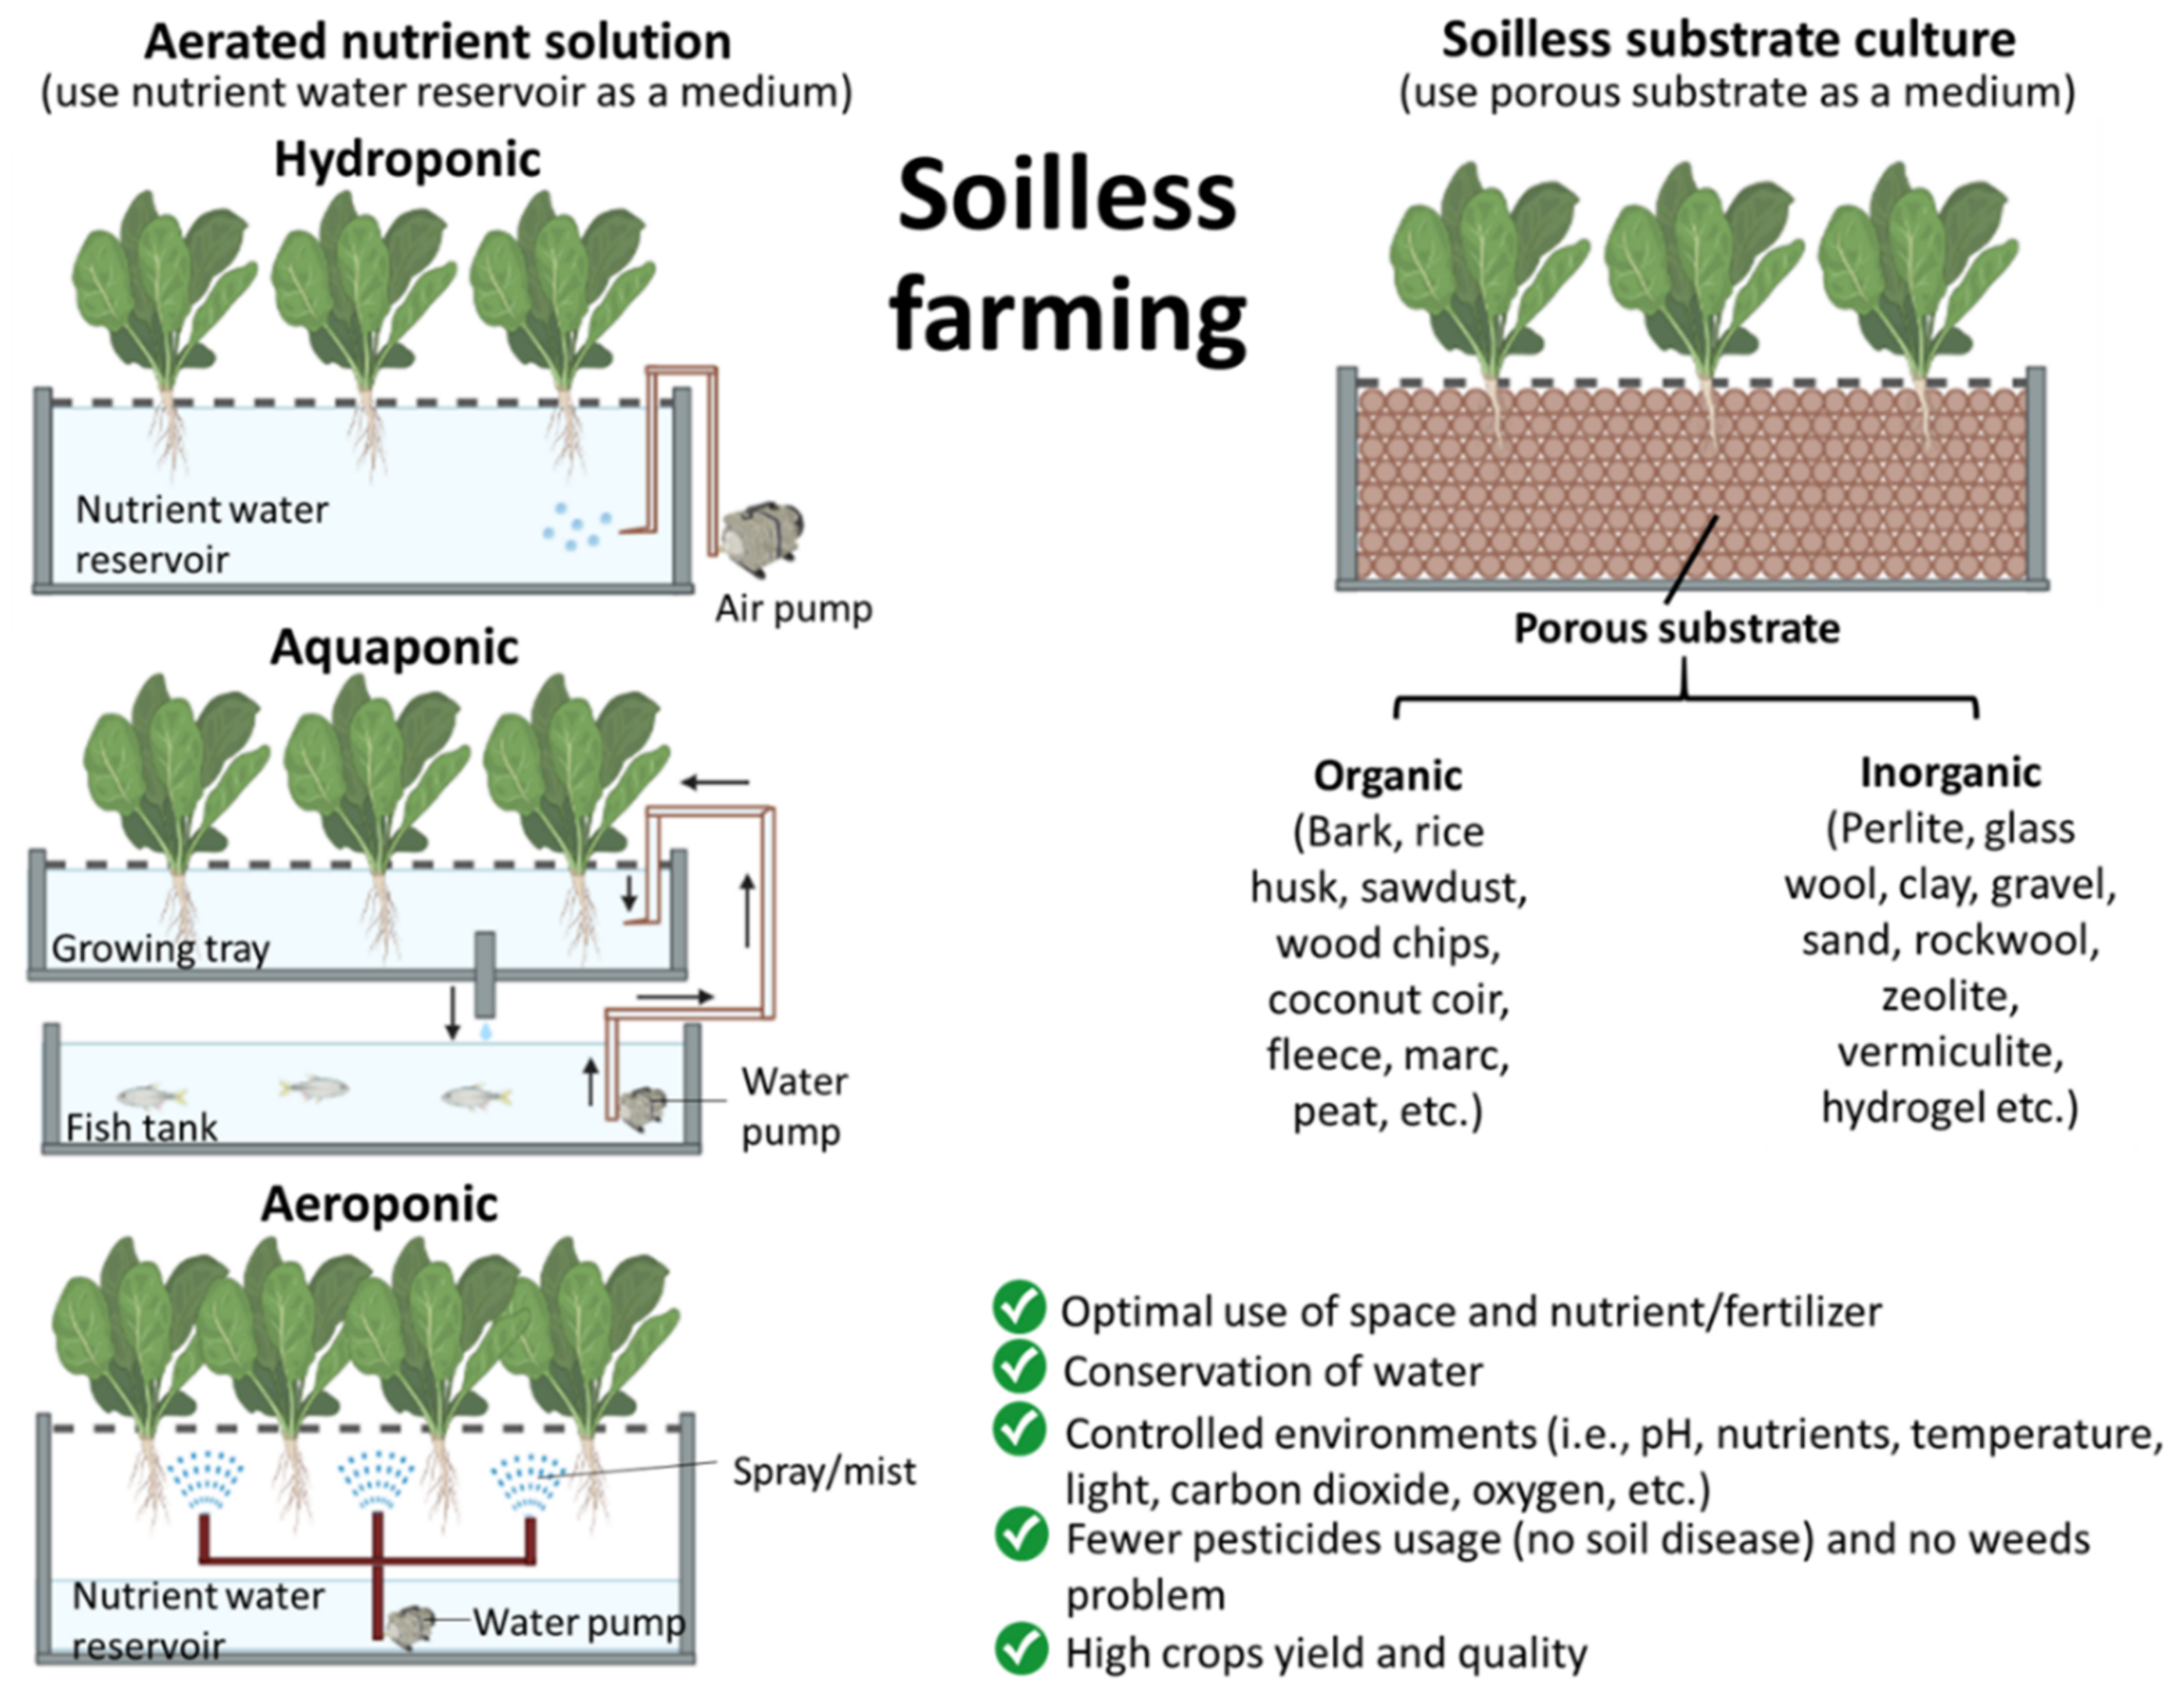 III. Key Factors Influencing Soil Cultivation Laws